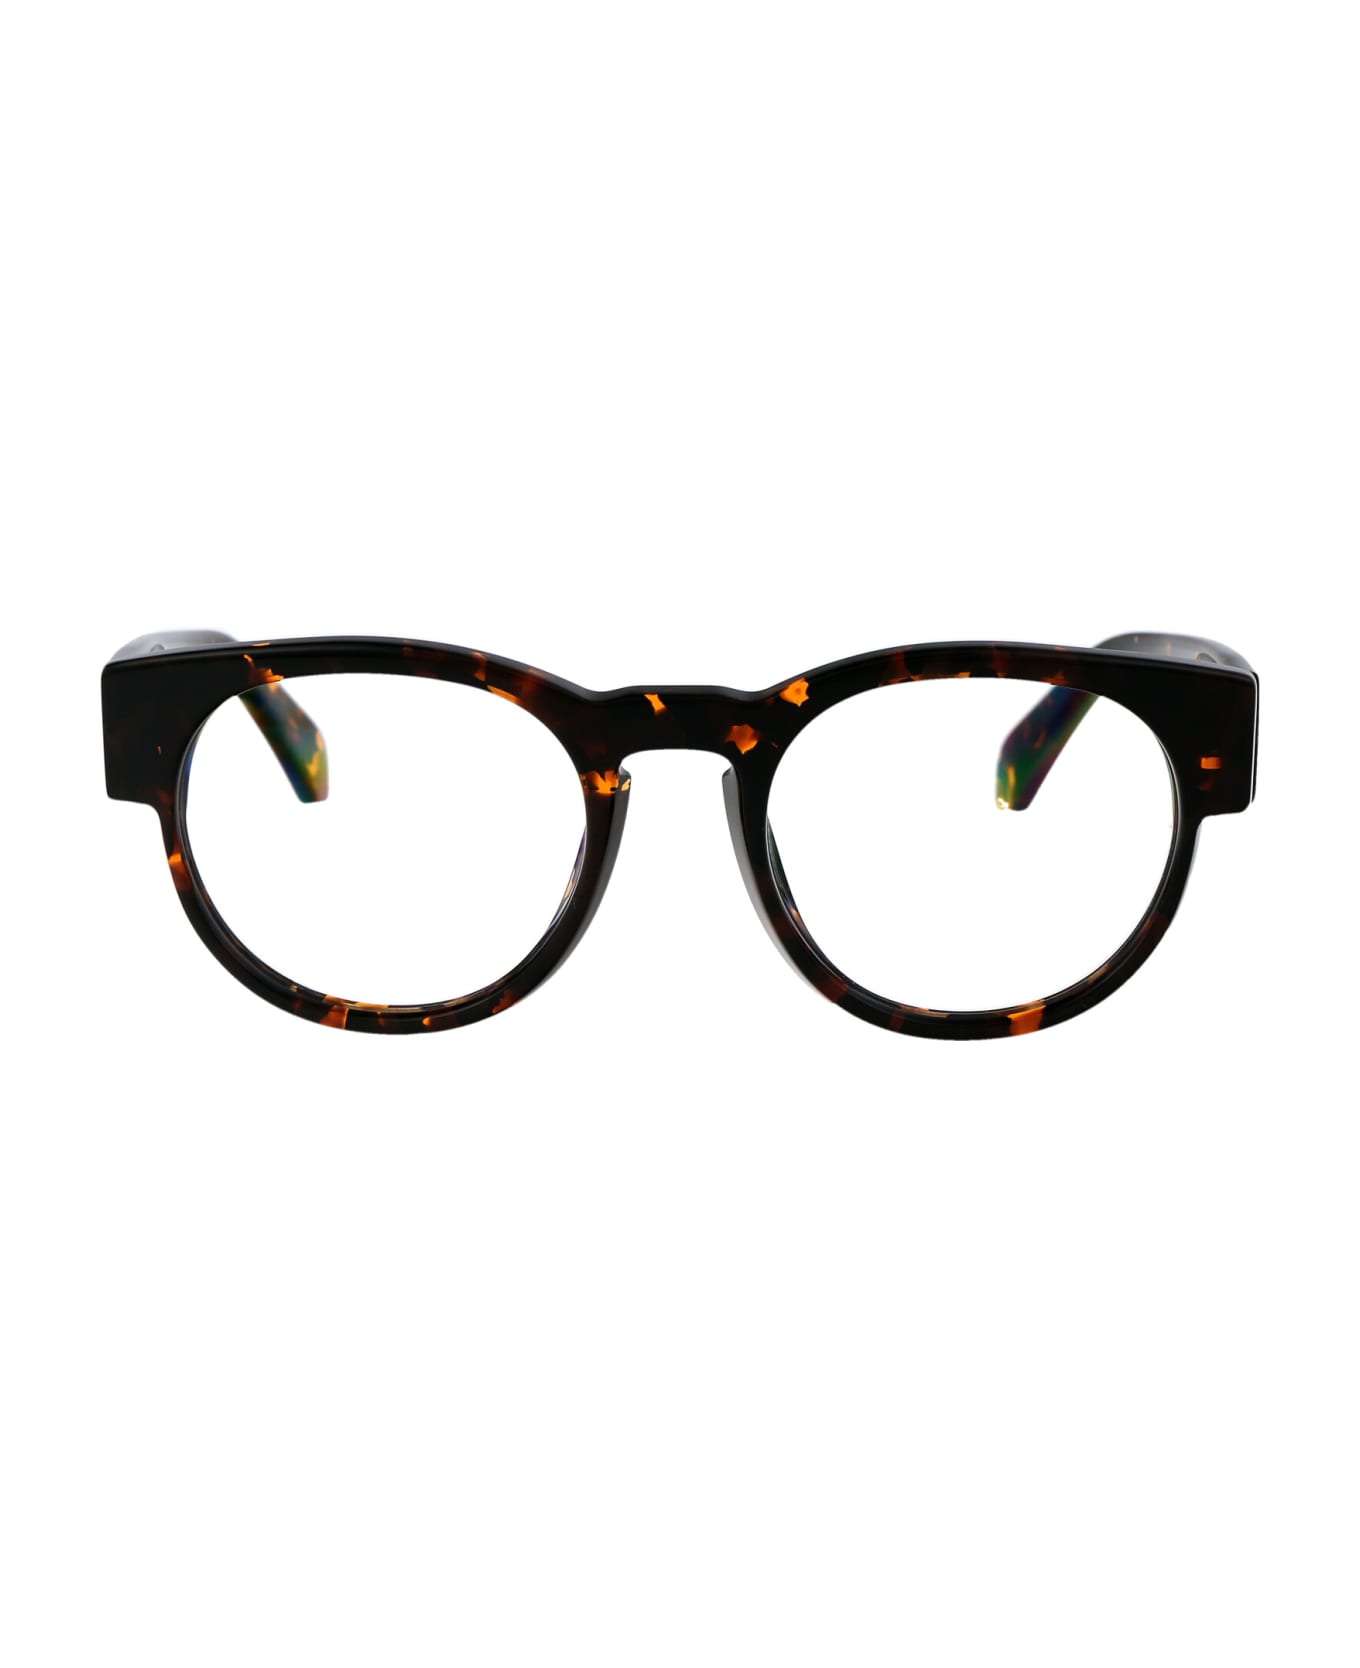 Off-White Optical Style 58 Glasses - 6000 HAVANA